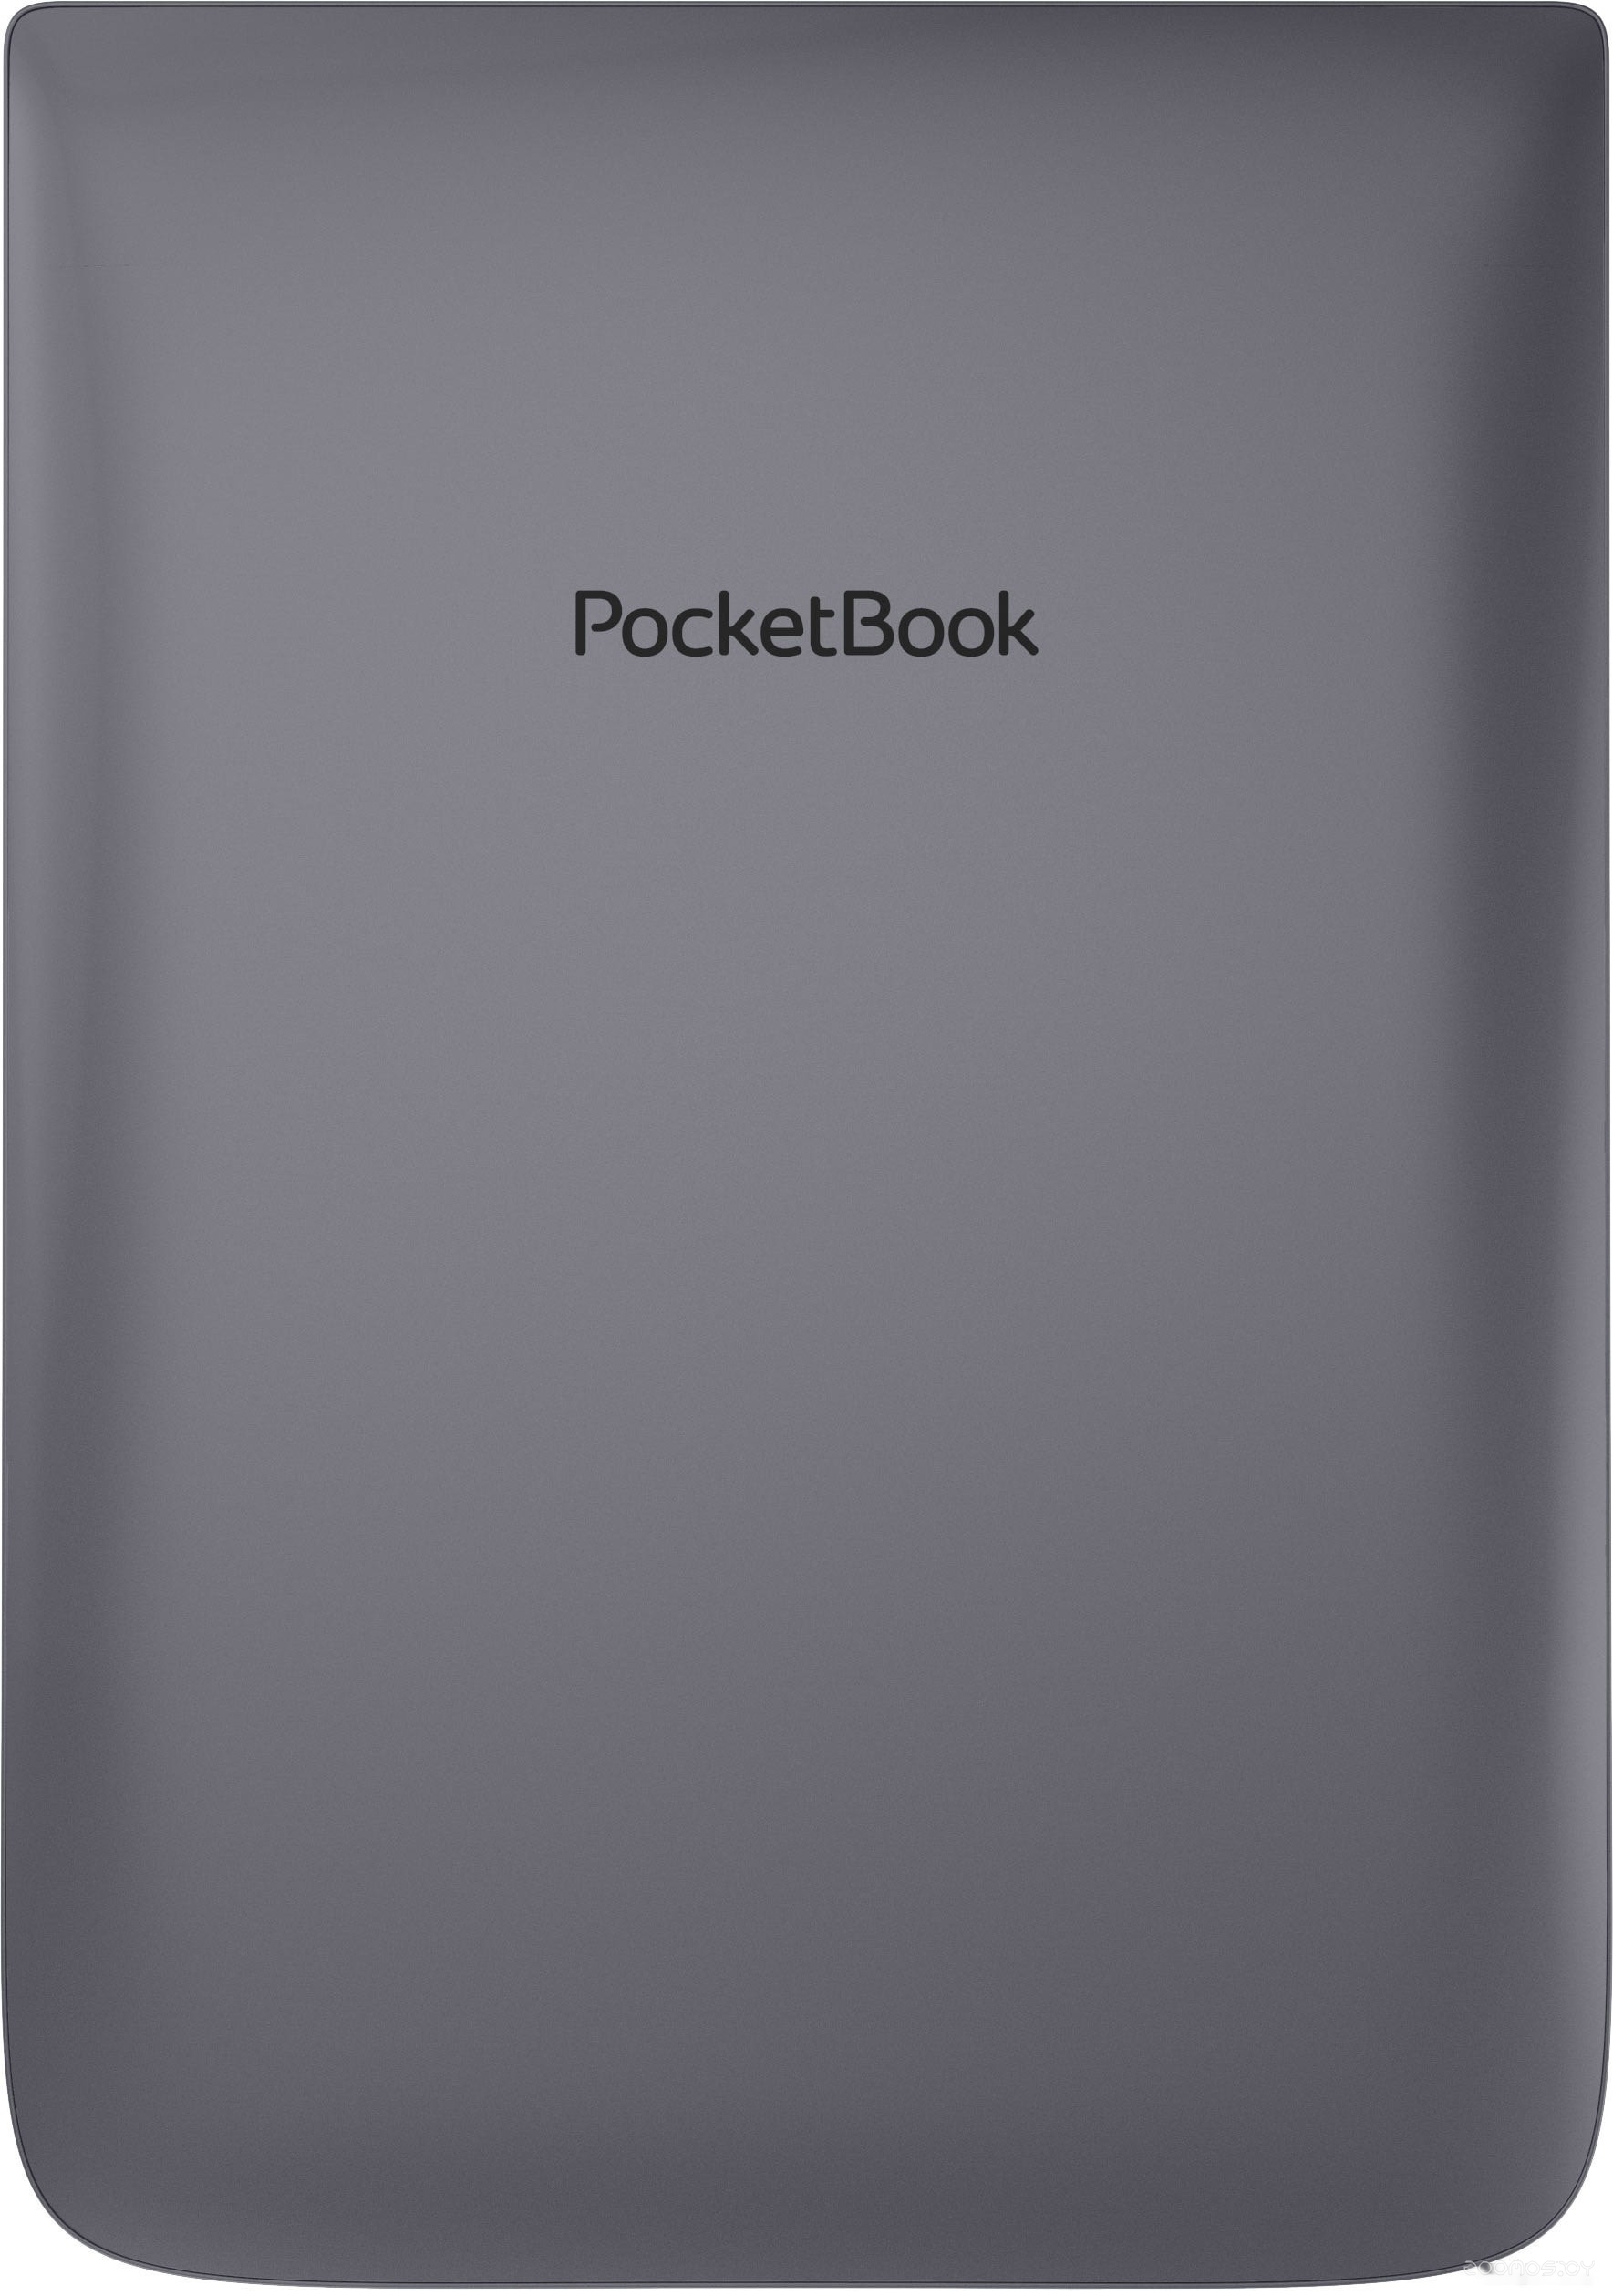   PocketBook InkPad 3 Pro ()     